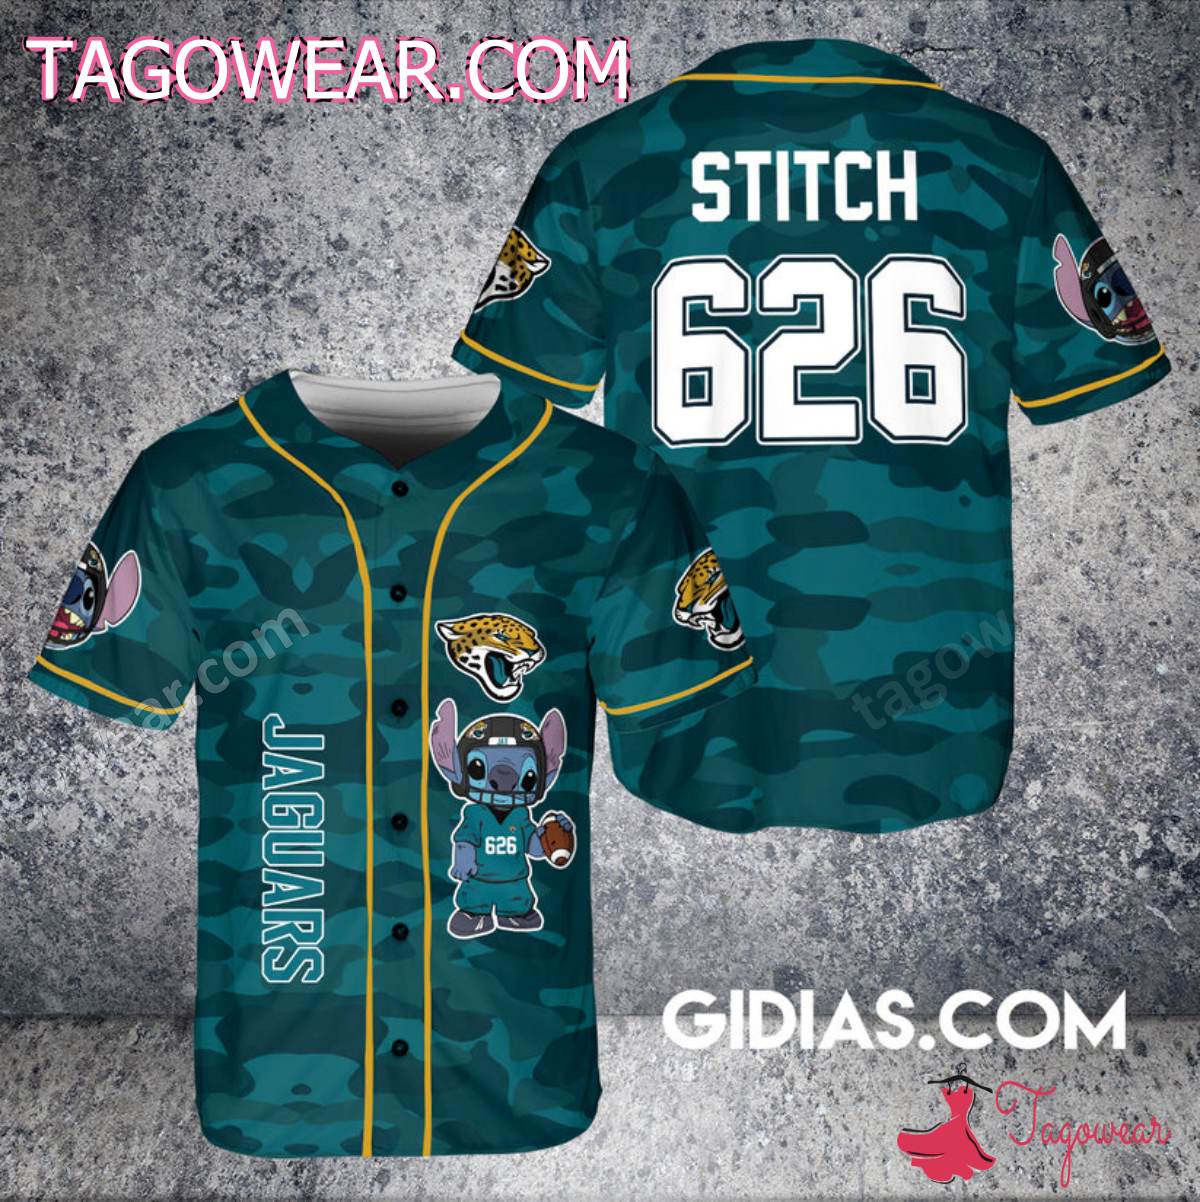 Jacksonville Jaguars Stitch Camouflage Personalized Baseball Jersey